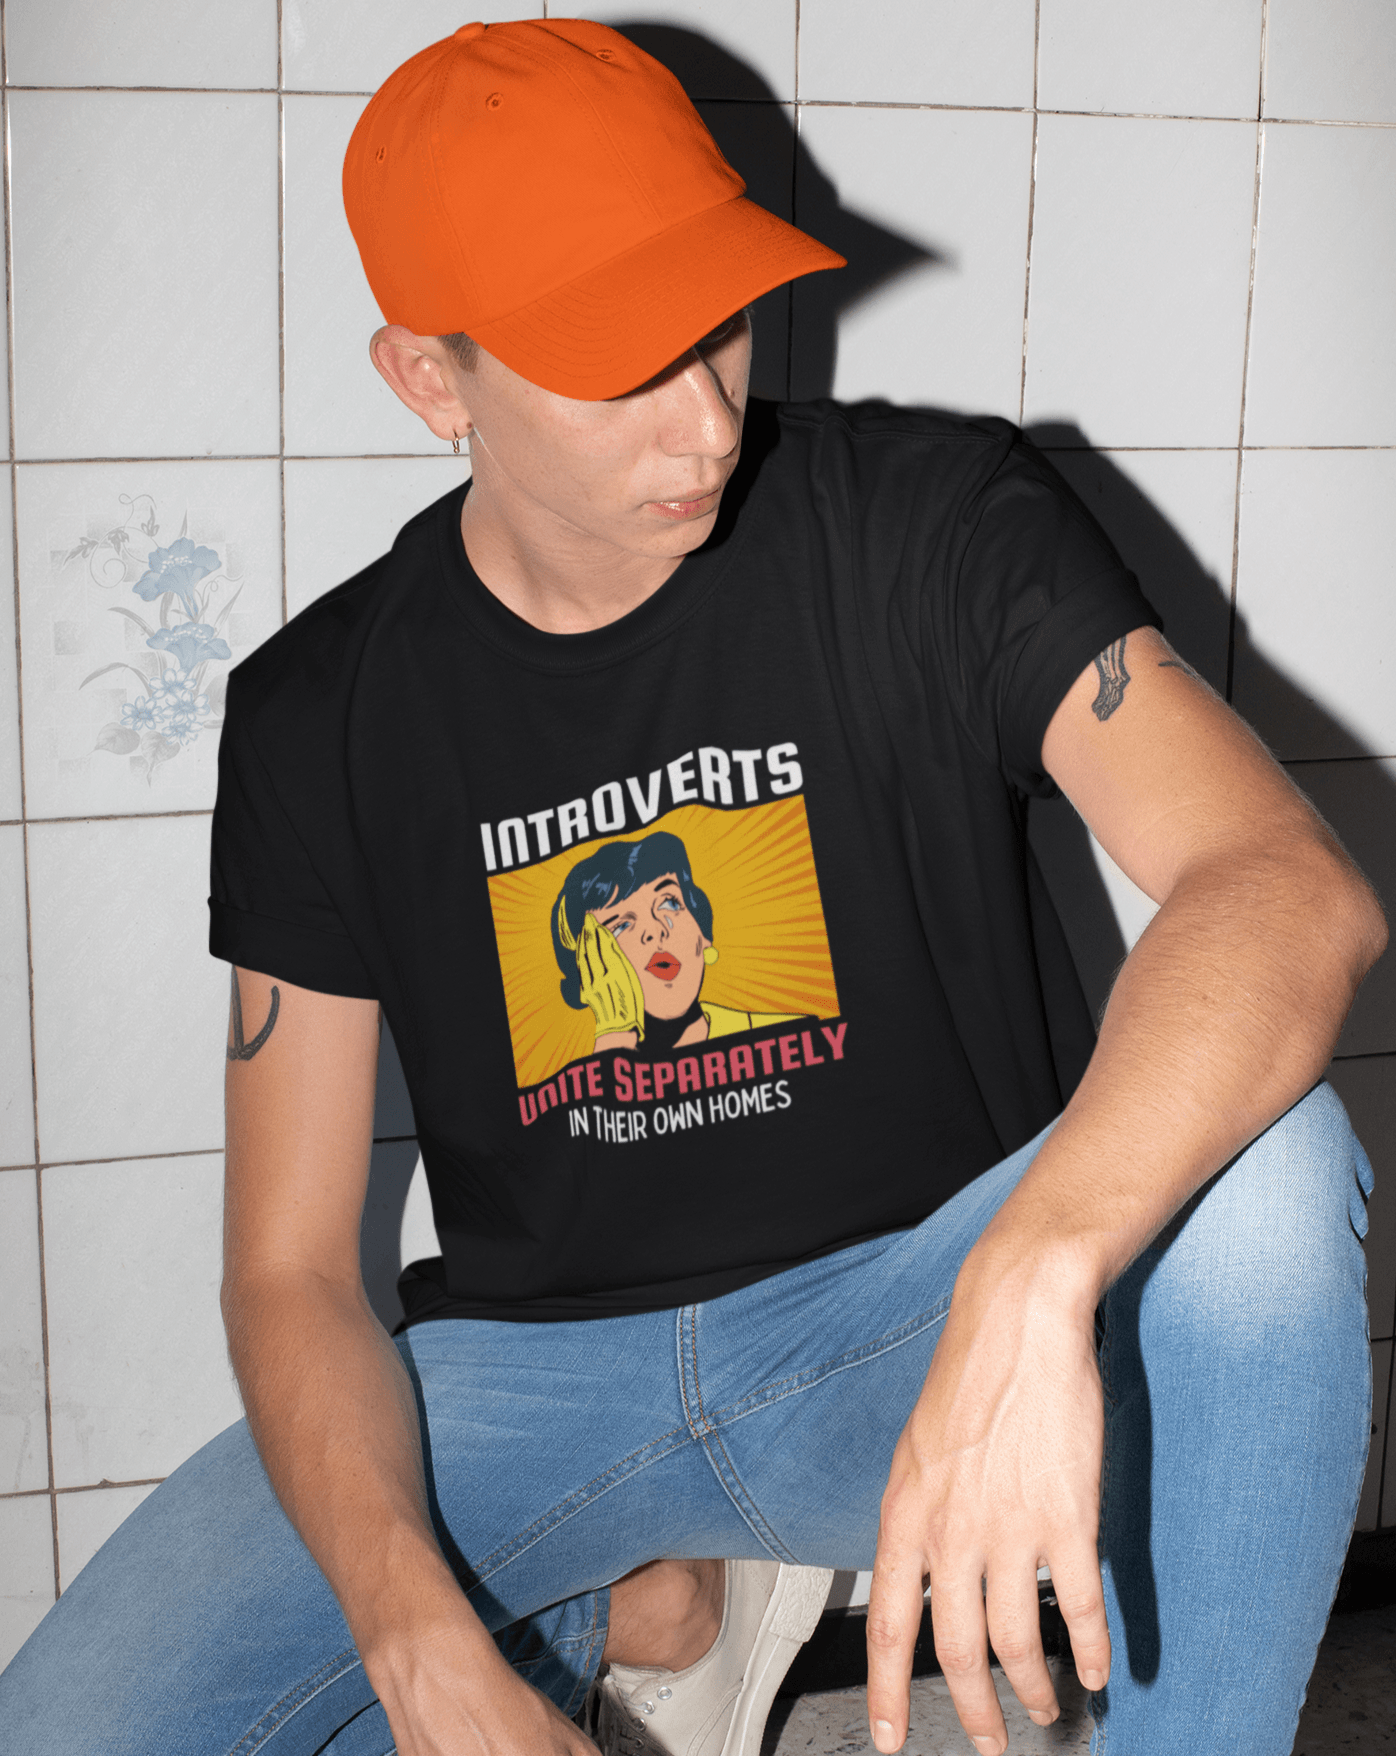 Introverts Unite Separately T-shirt - Koral Dusk